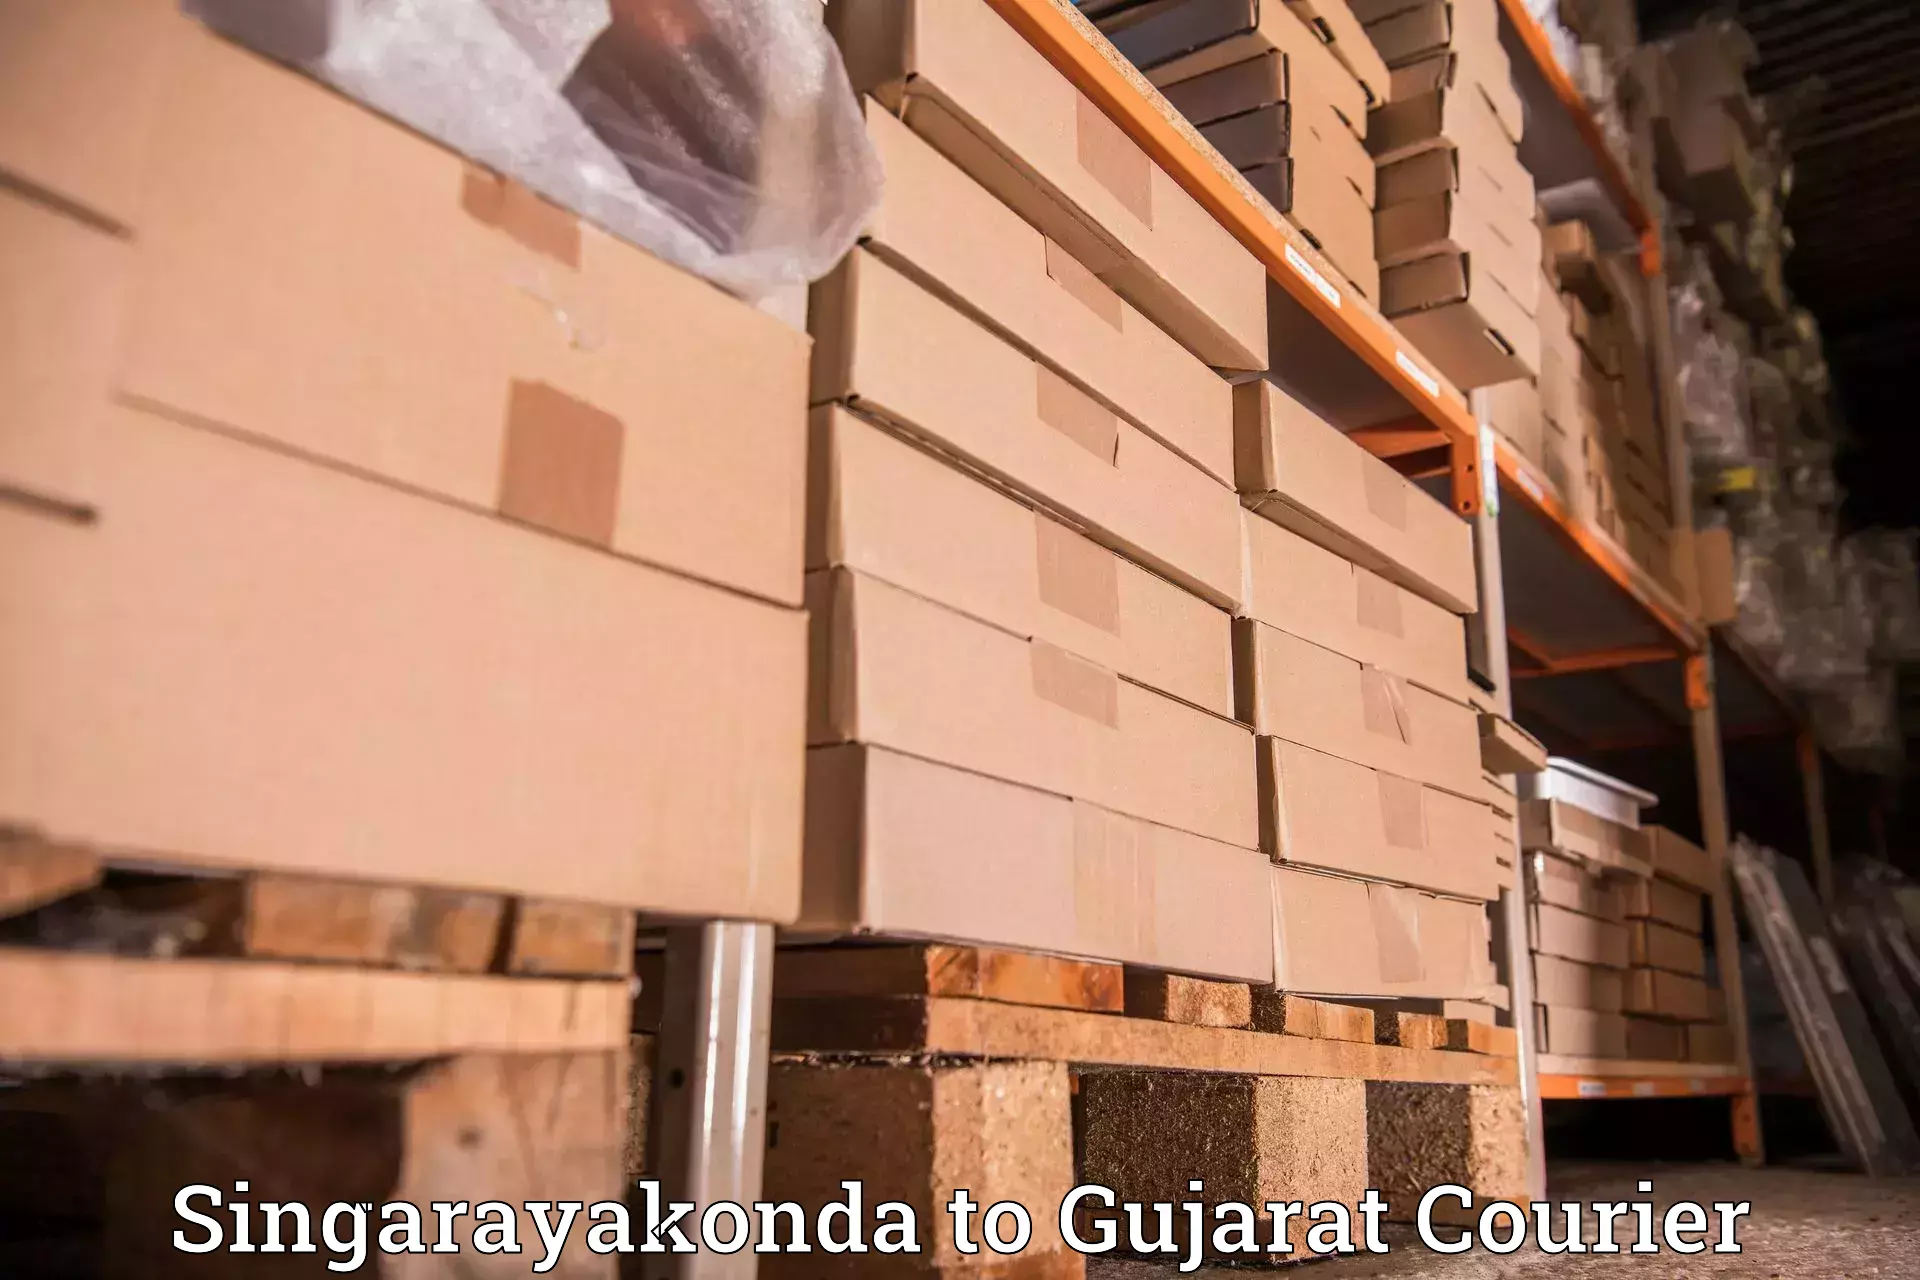 Package delivery network Singarayakonda to Banaskantha